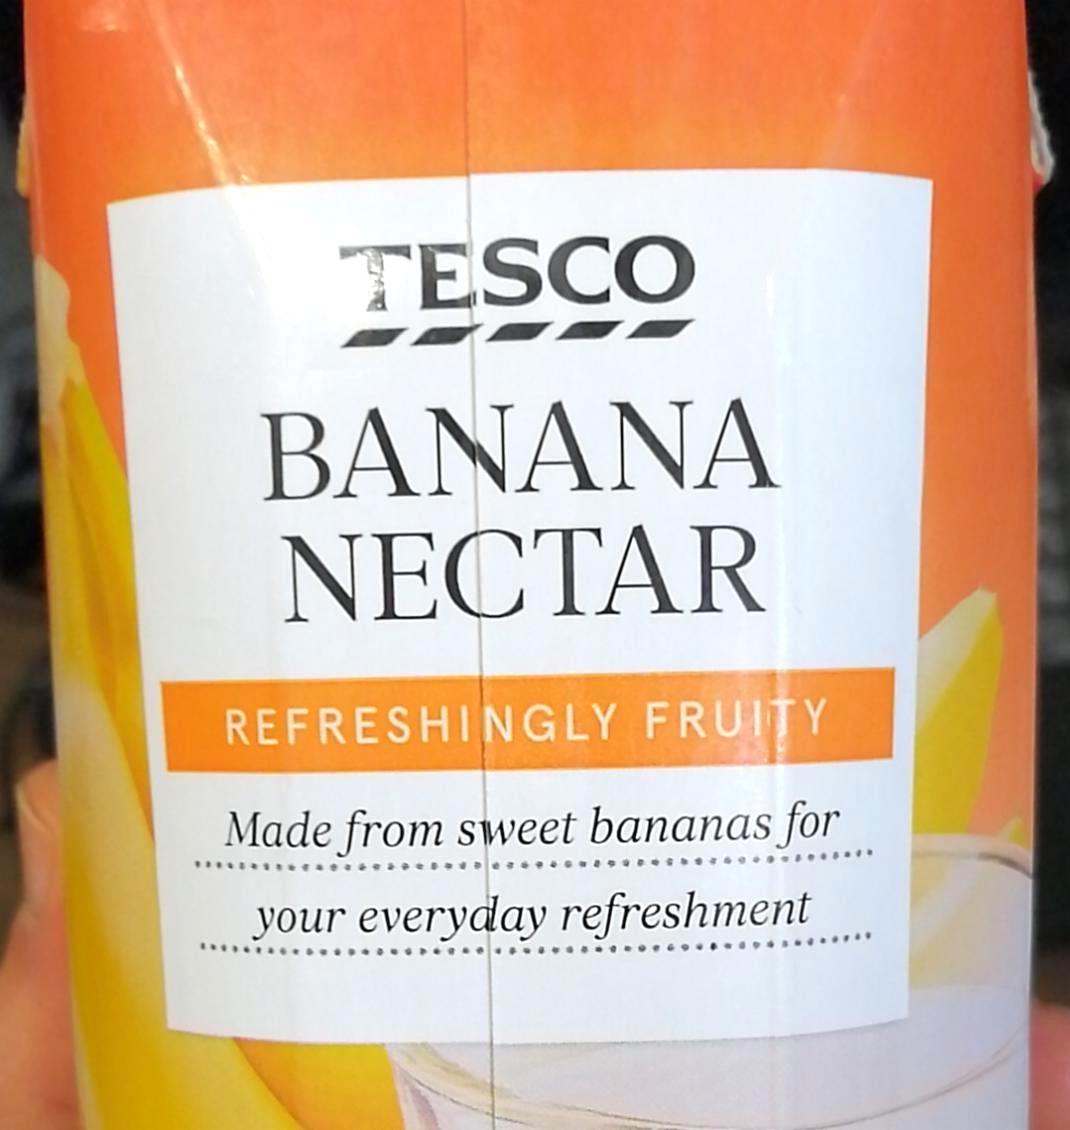 Képek - Banana nectar Tesco